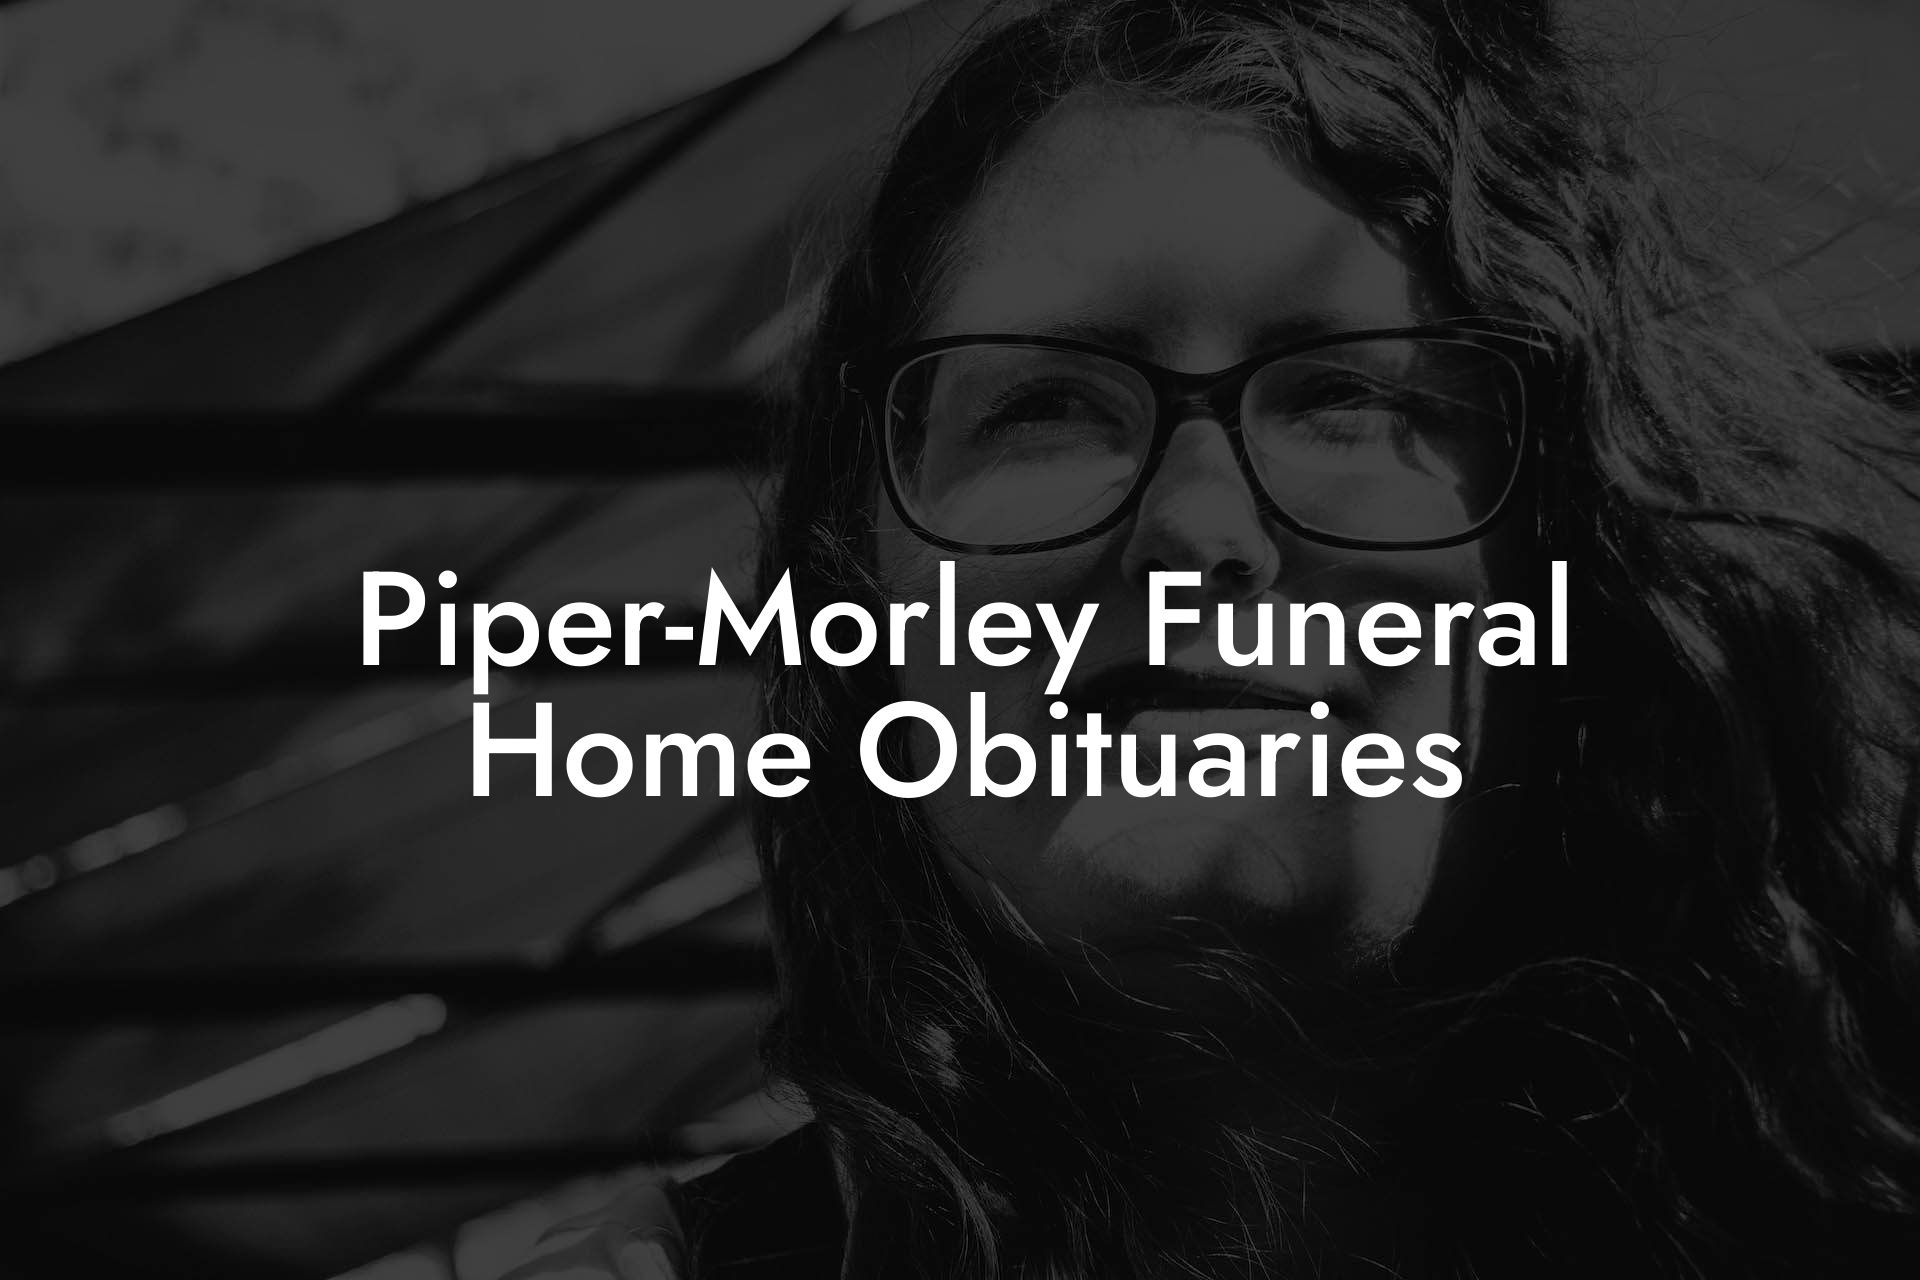 Piper-Morley Funeral Home Obituaries